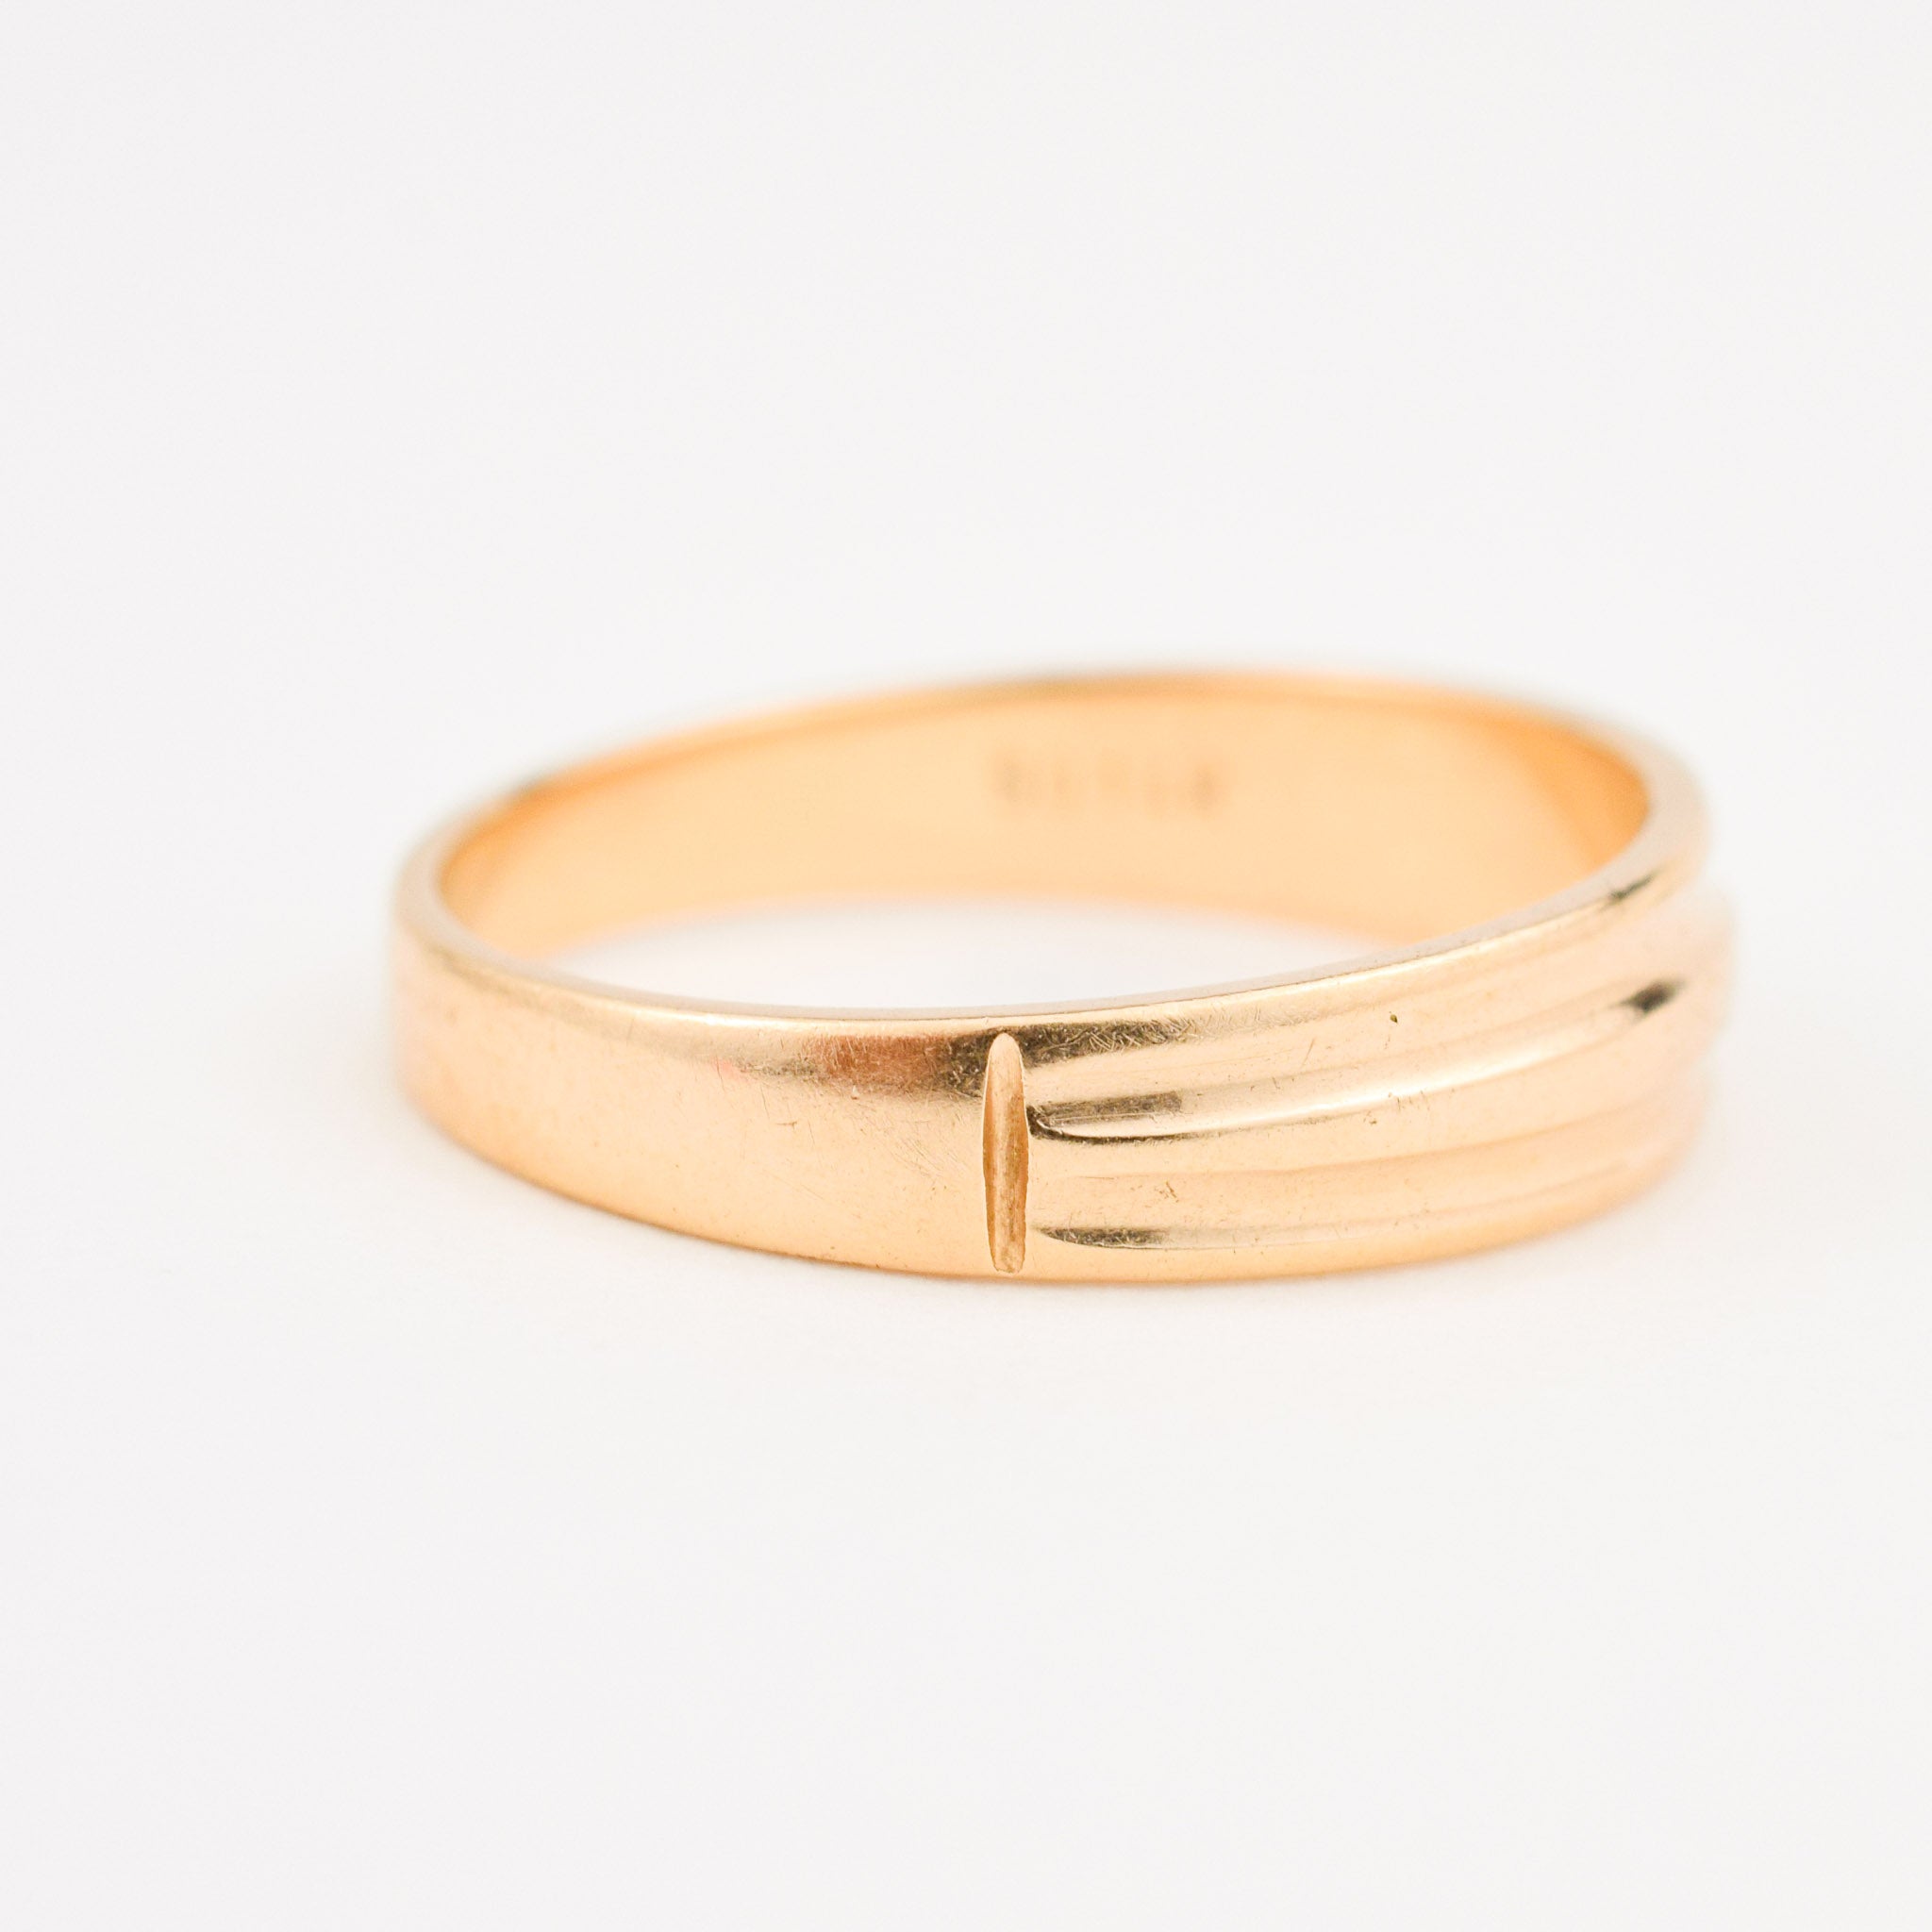 14k ribbed gold ring, 14k gold wedding band 